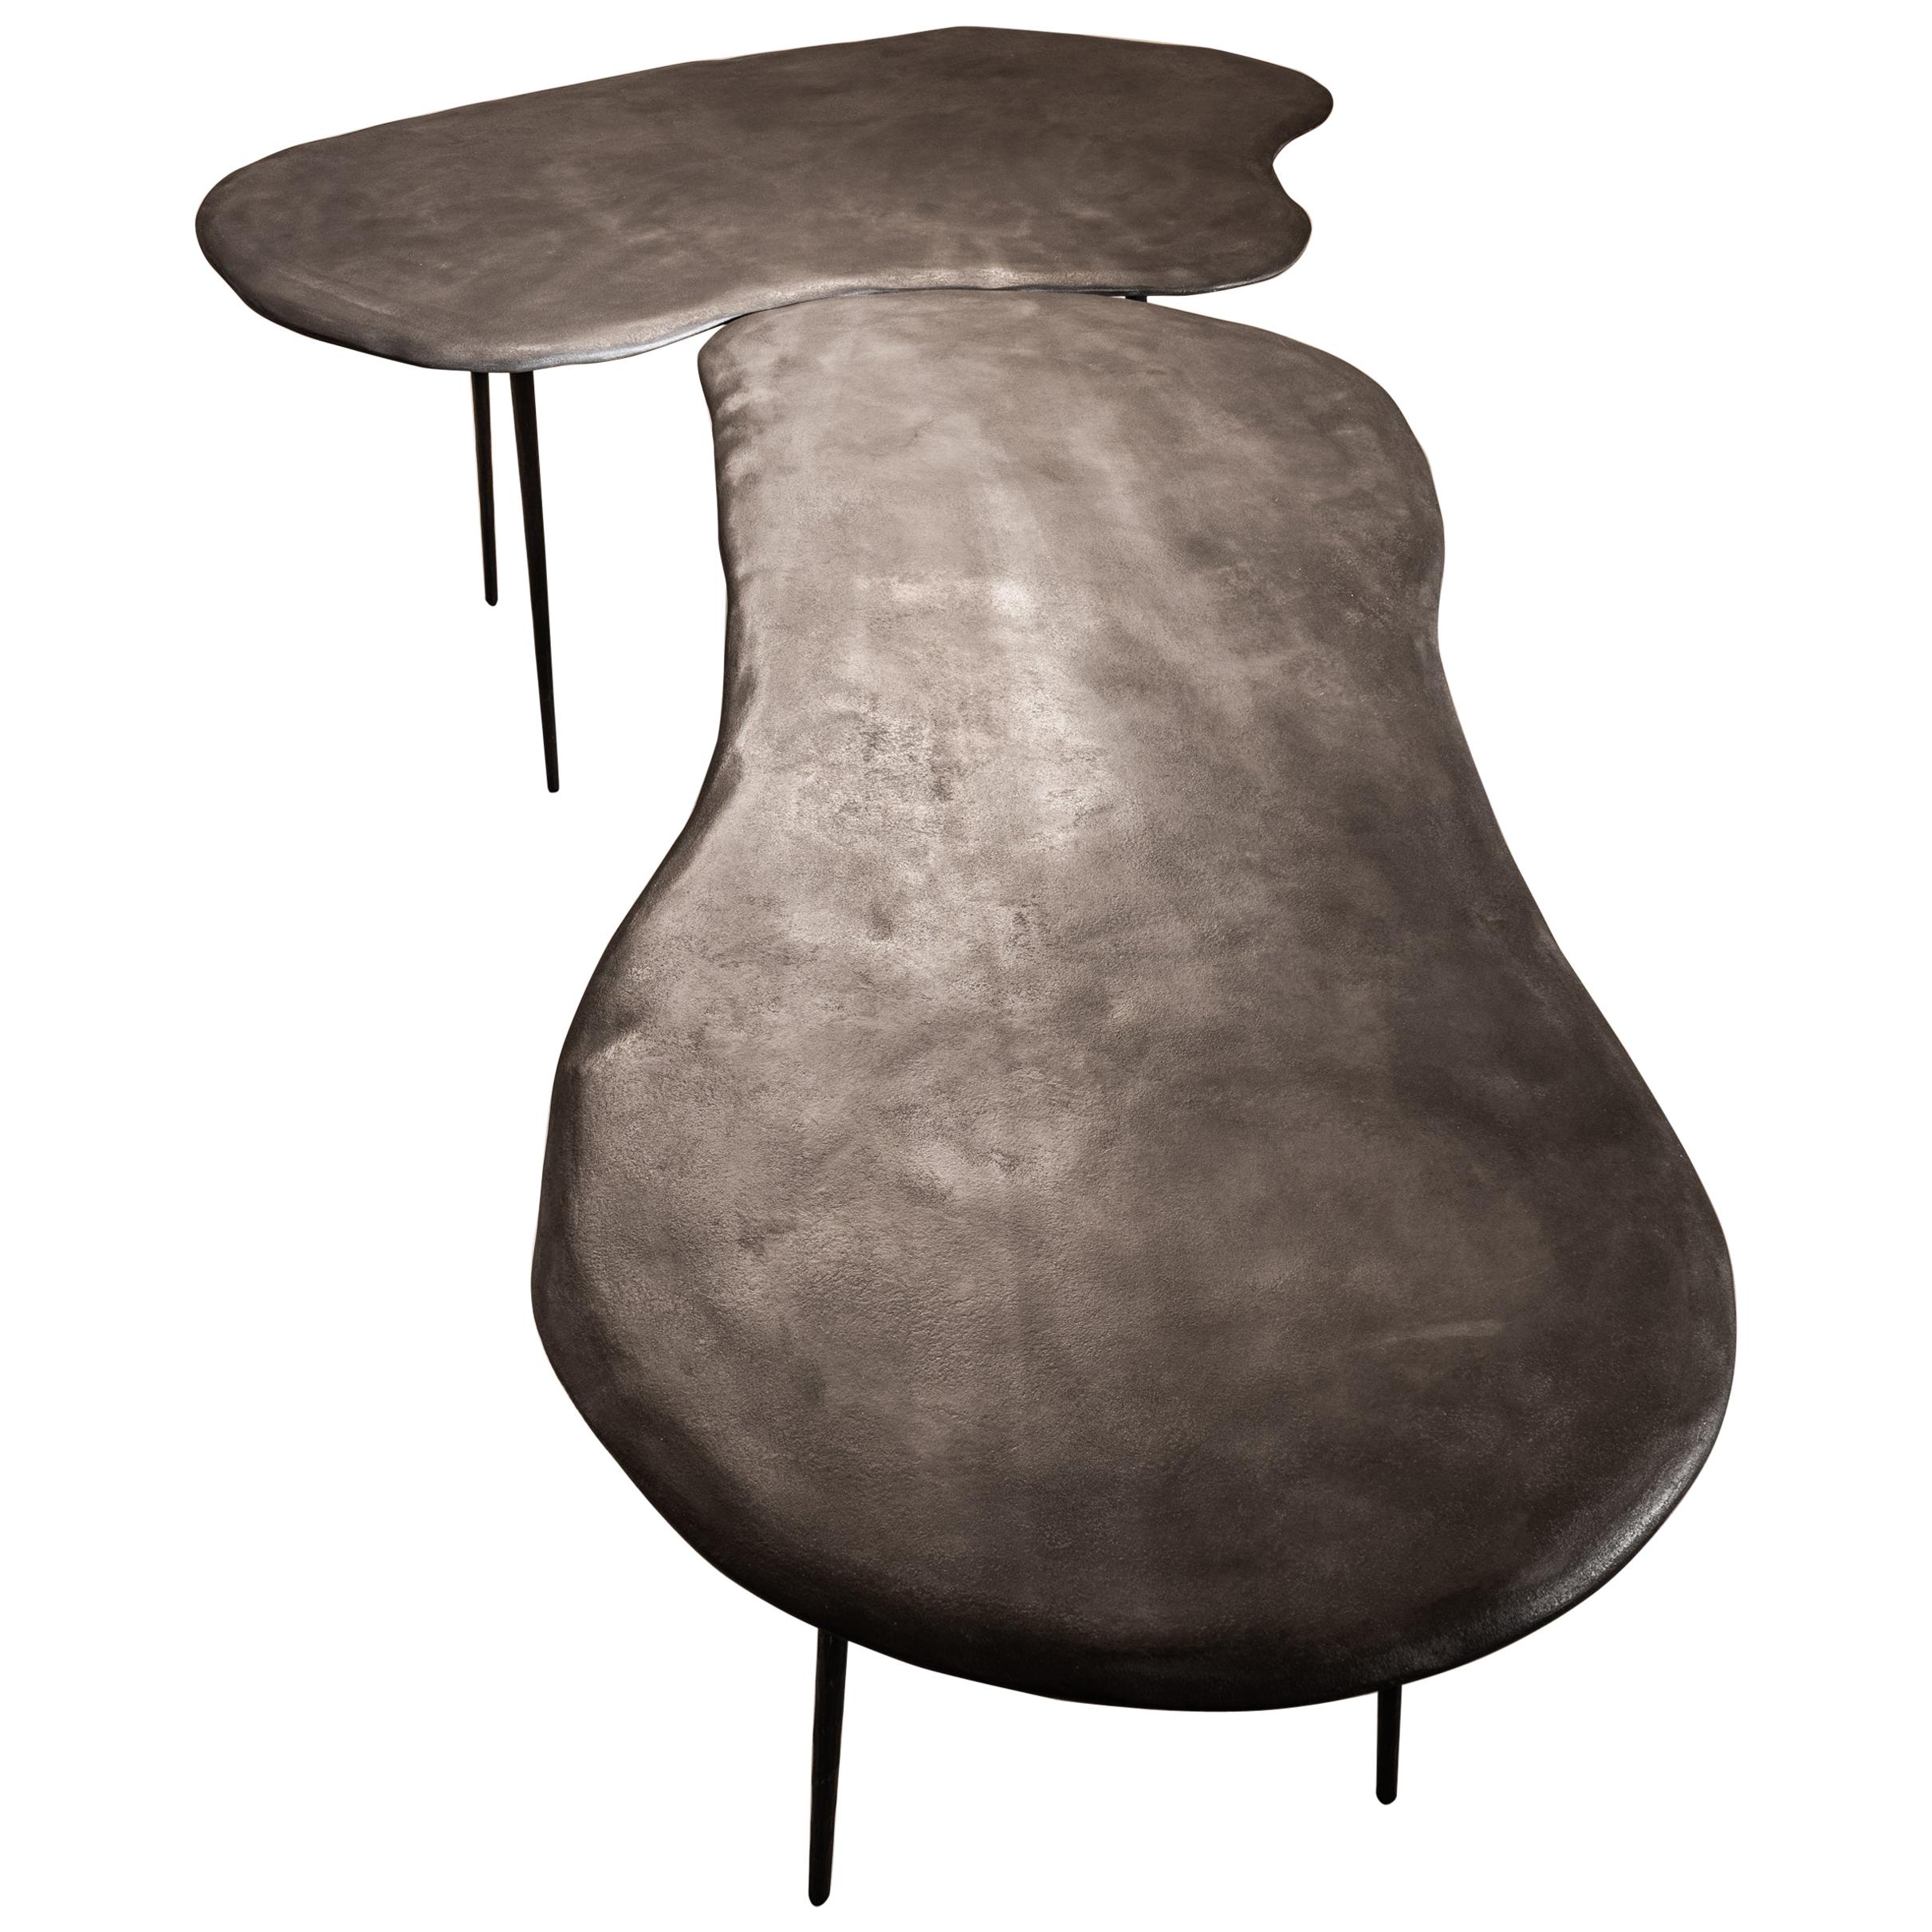 Duo de tables Varenna par Studio Emblématique en vente